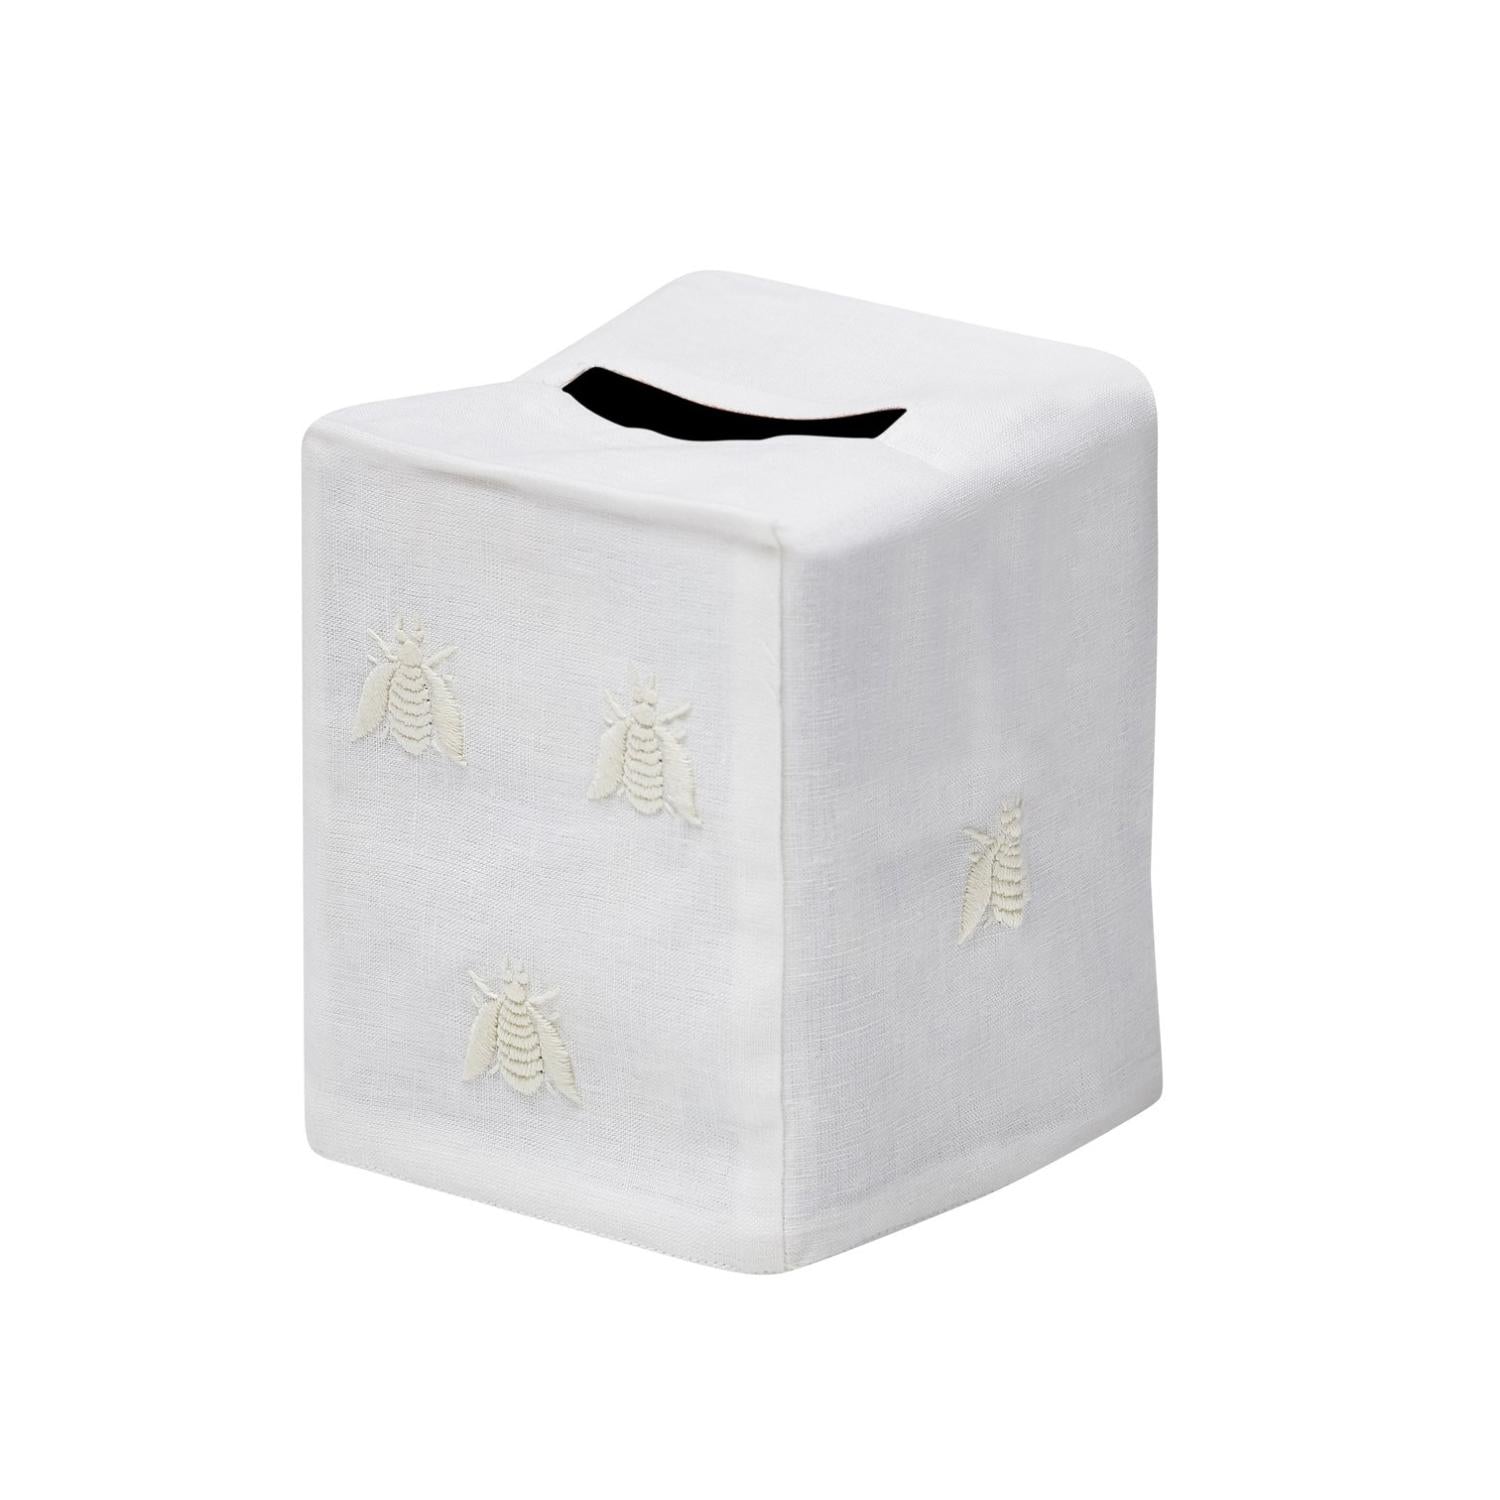 Bees Tissue Box Cover - Cream/White